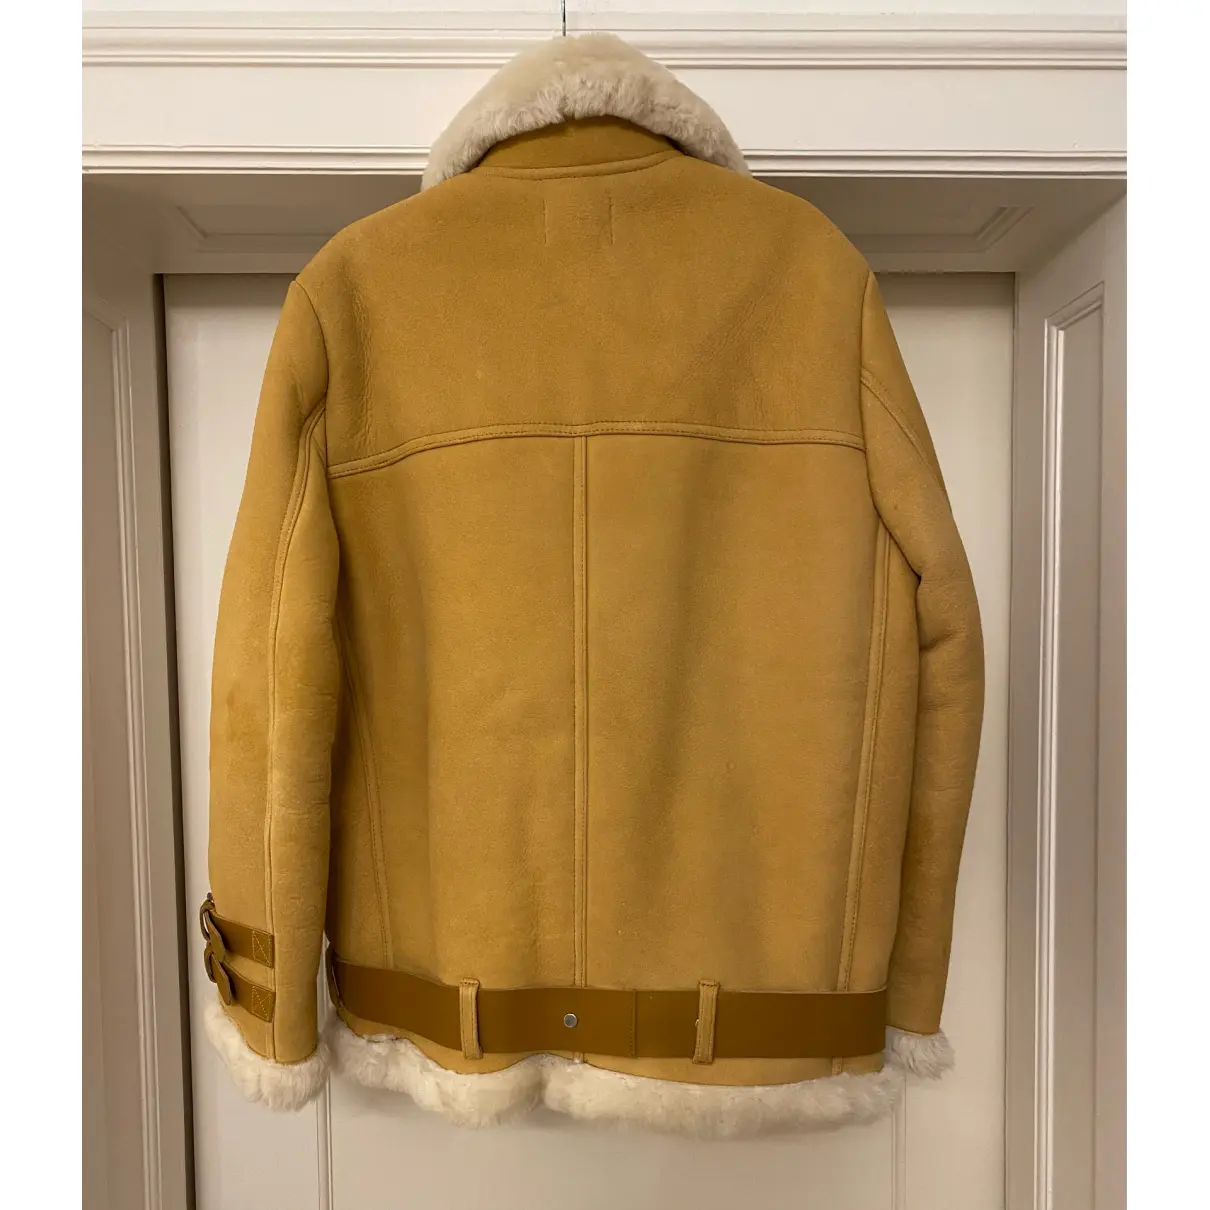 Buy Ducie Shearling coat online